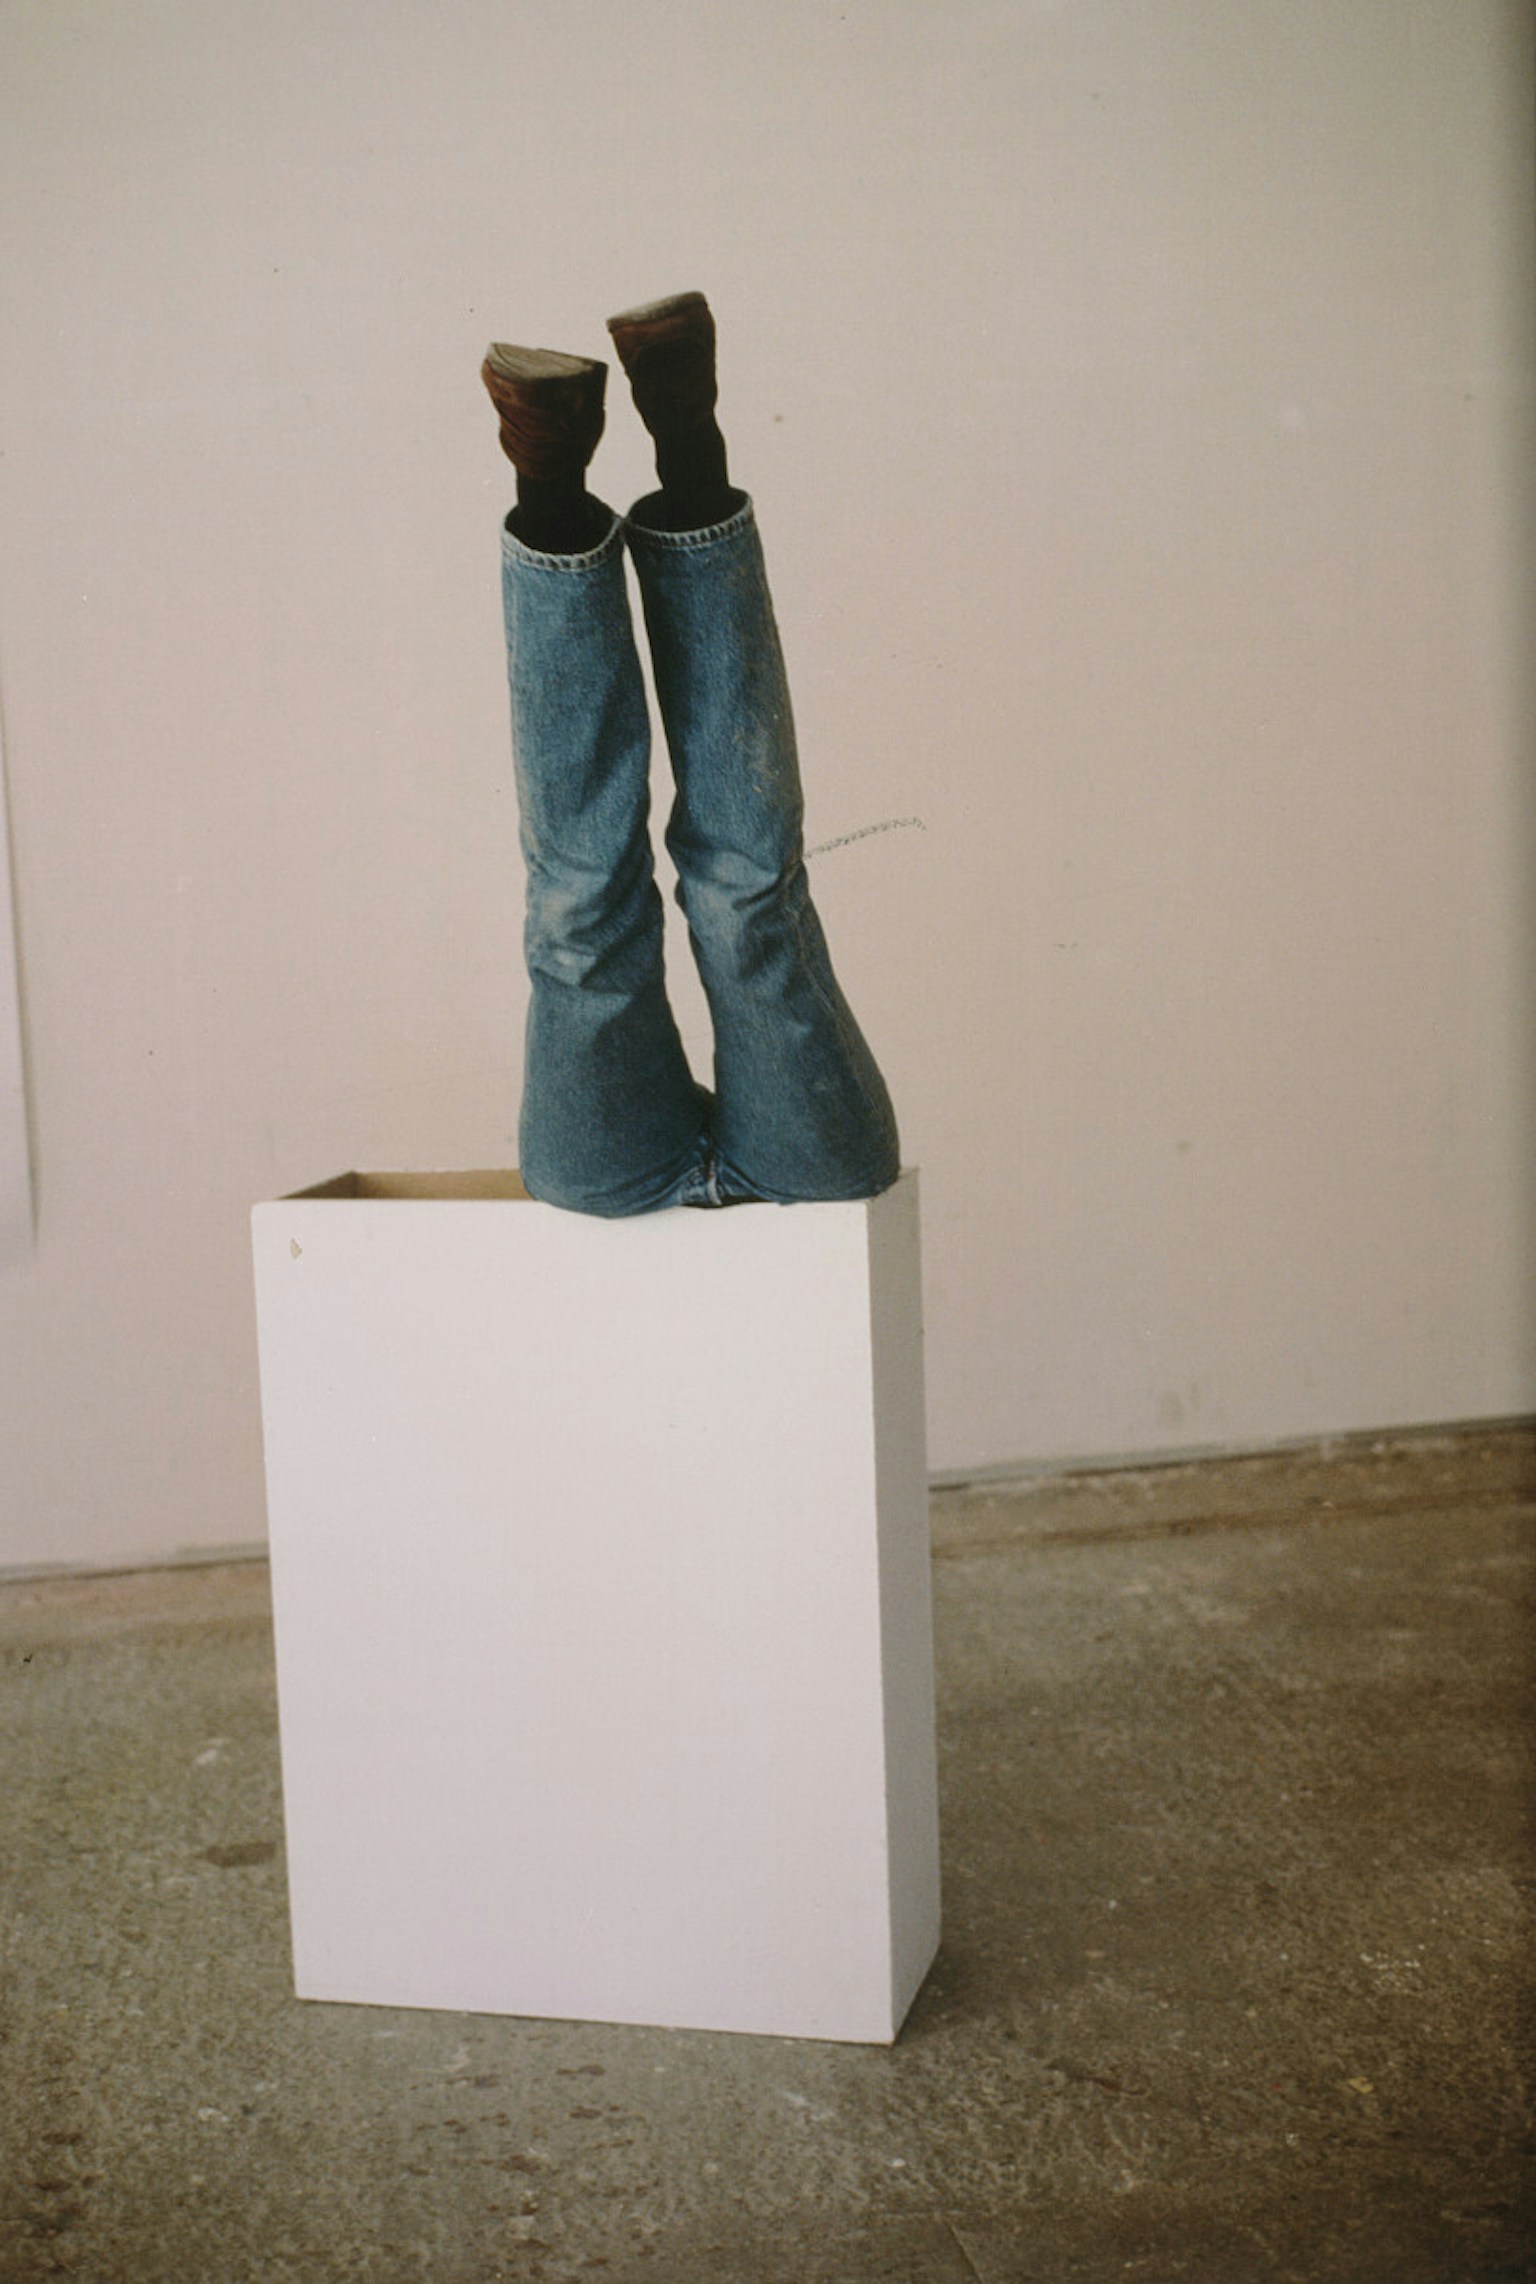 Erwin wurm one minute sculpture 1997 albertina wien c bildrecht wien 2024 0x1200